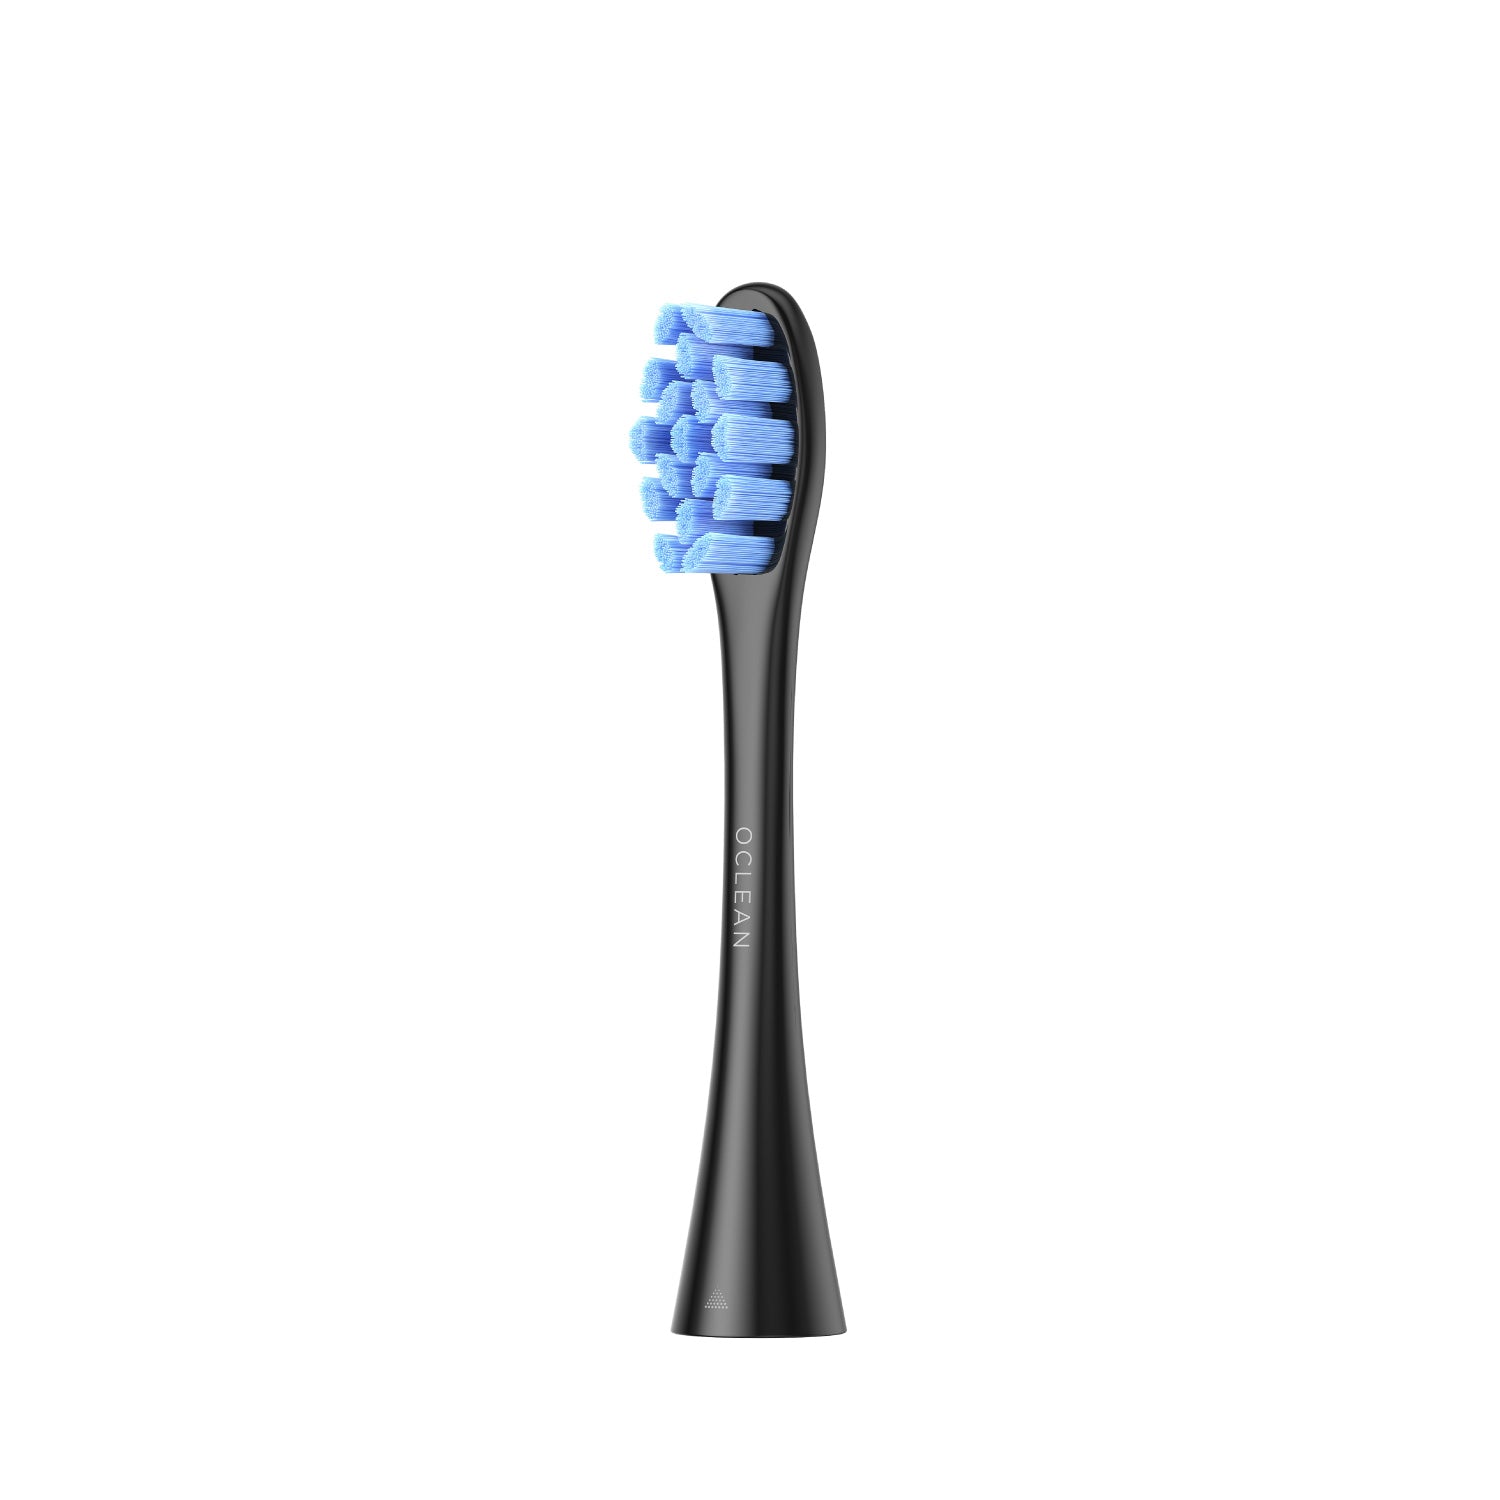 Oclean Brush Heads Refills-Toothbrush Replacement Heads-Oclean US Store